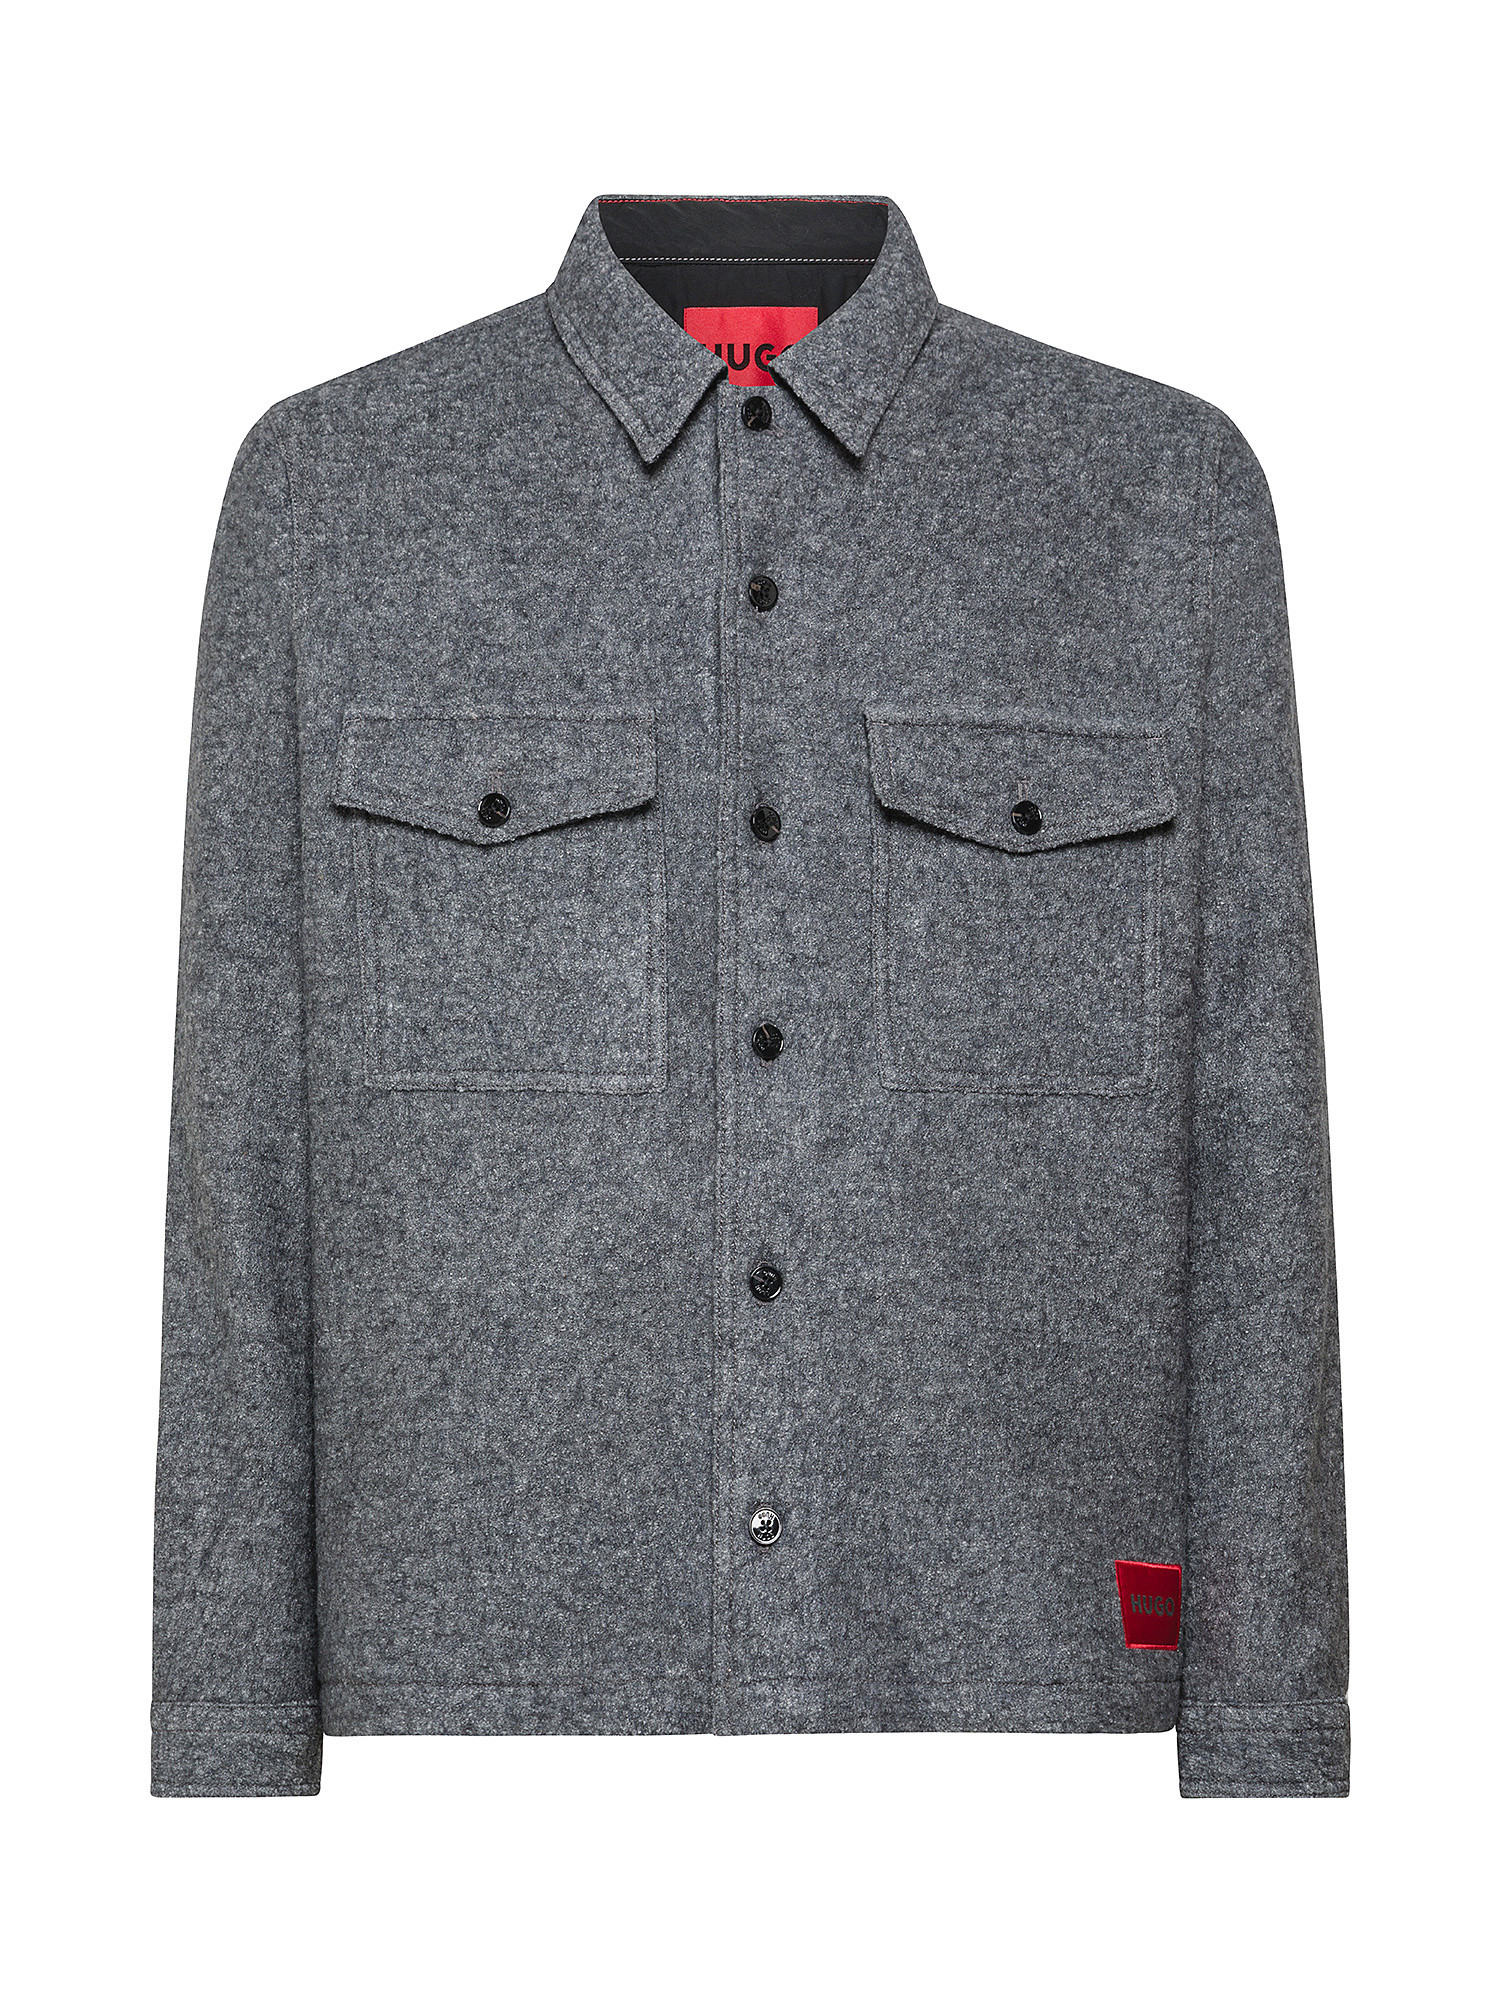 Hugo - Oversized shirt jacket in wool blend, Grey, large image number 0